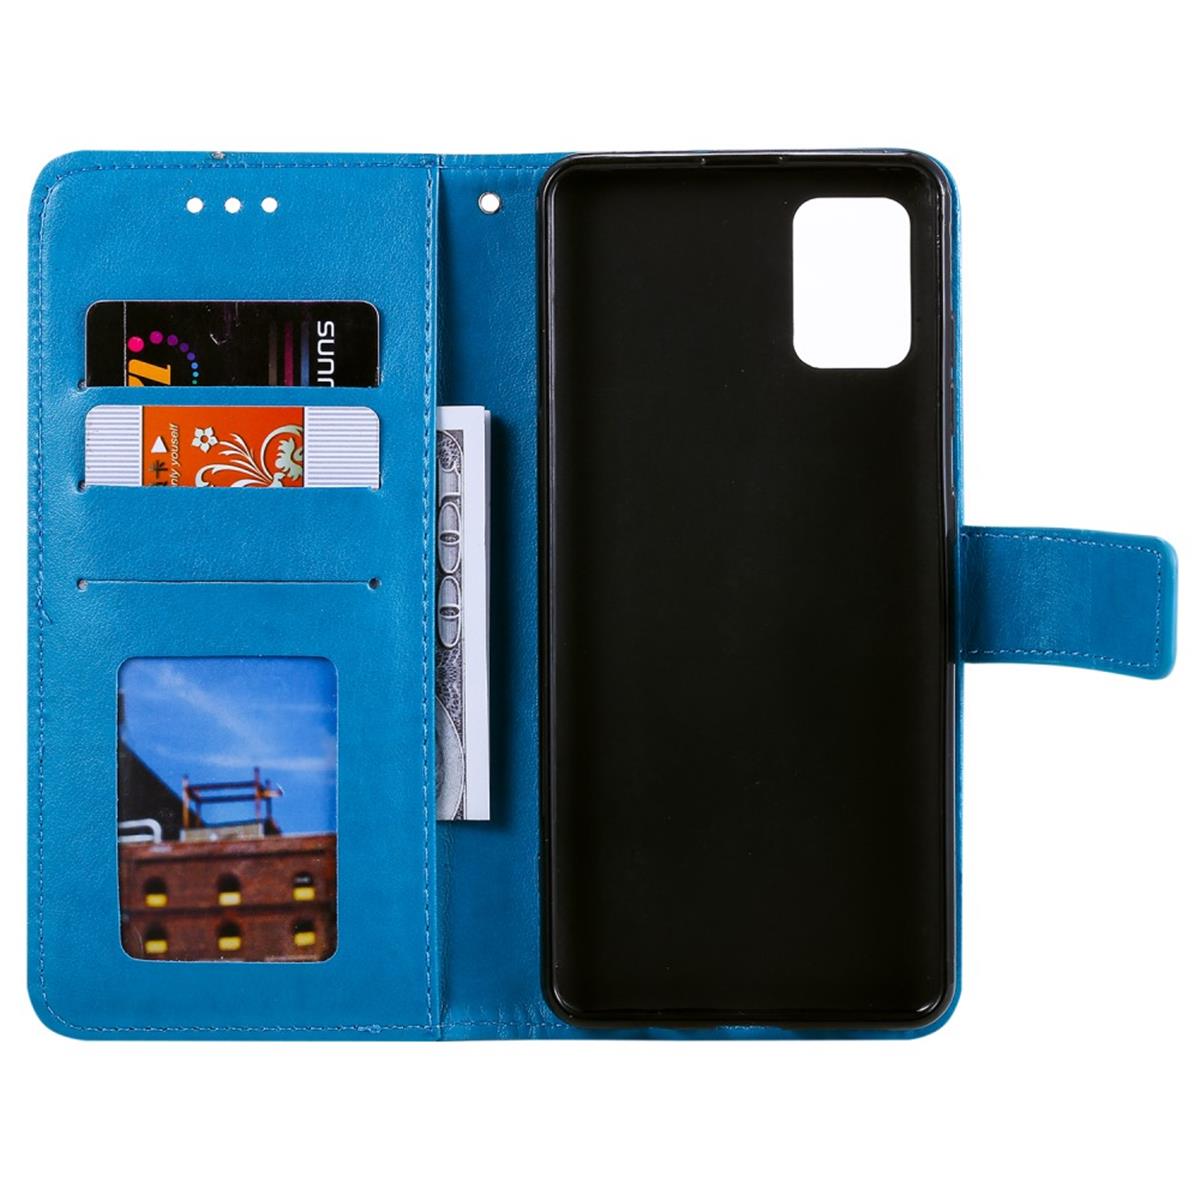 Hülle für Samsung Galaxy A31 Handyhülle Flip Case Cover Tasche Mandala Blau